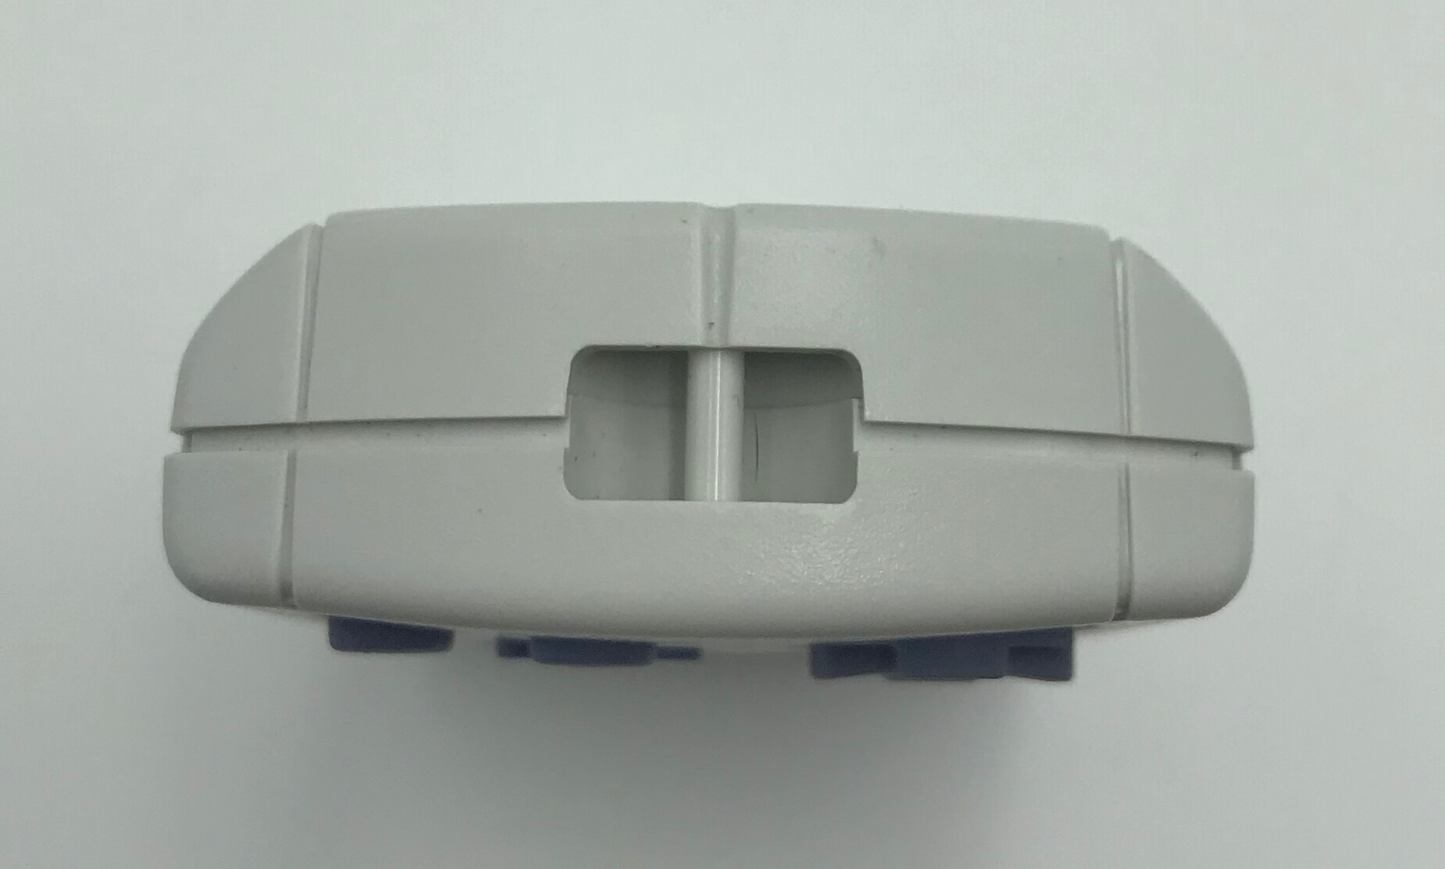 VMU Visual Memory Unit | White - Dreamcast